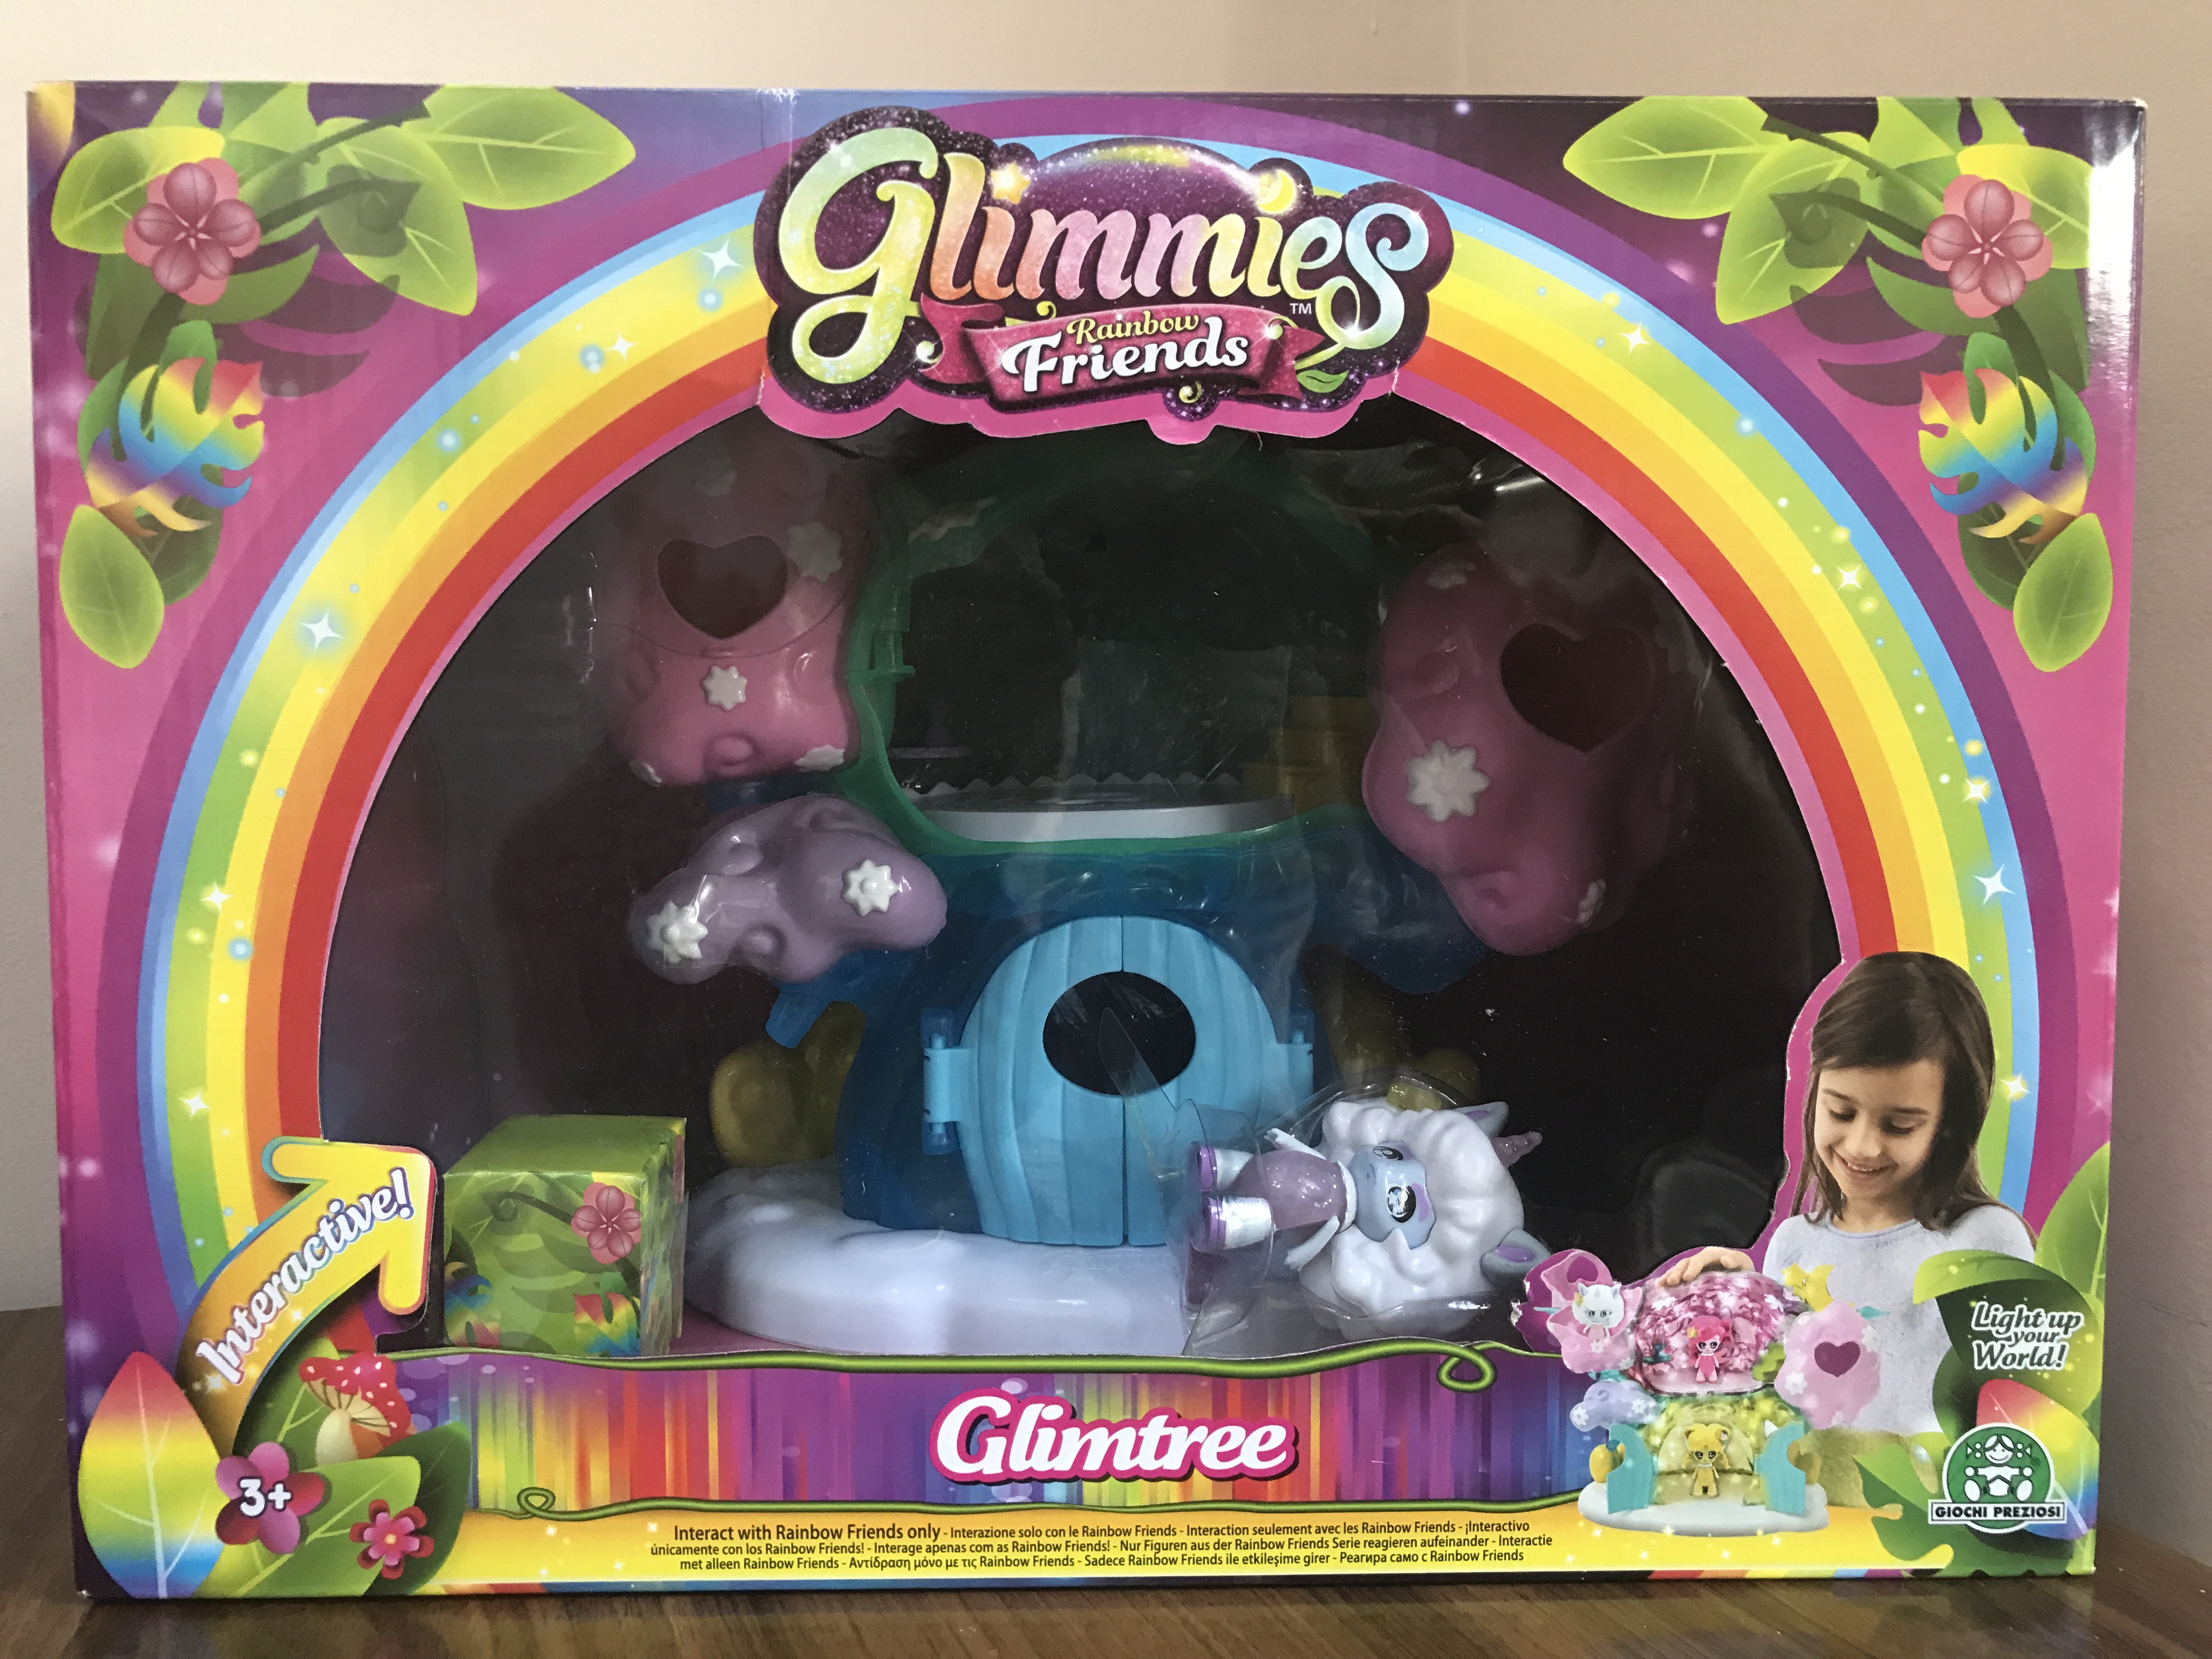 Glimmies – Glimtree Review